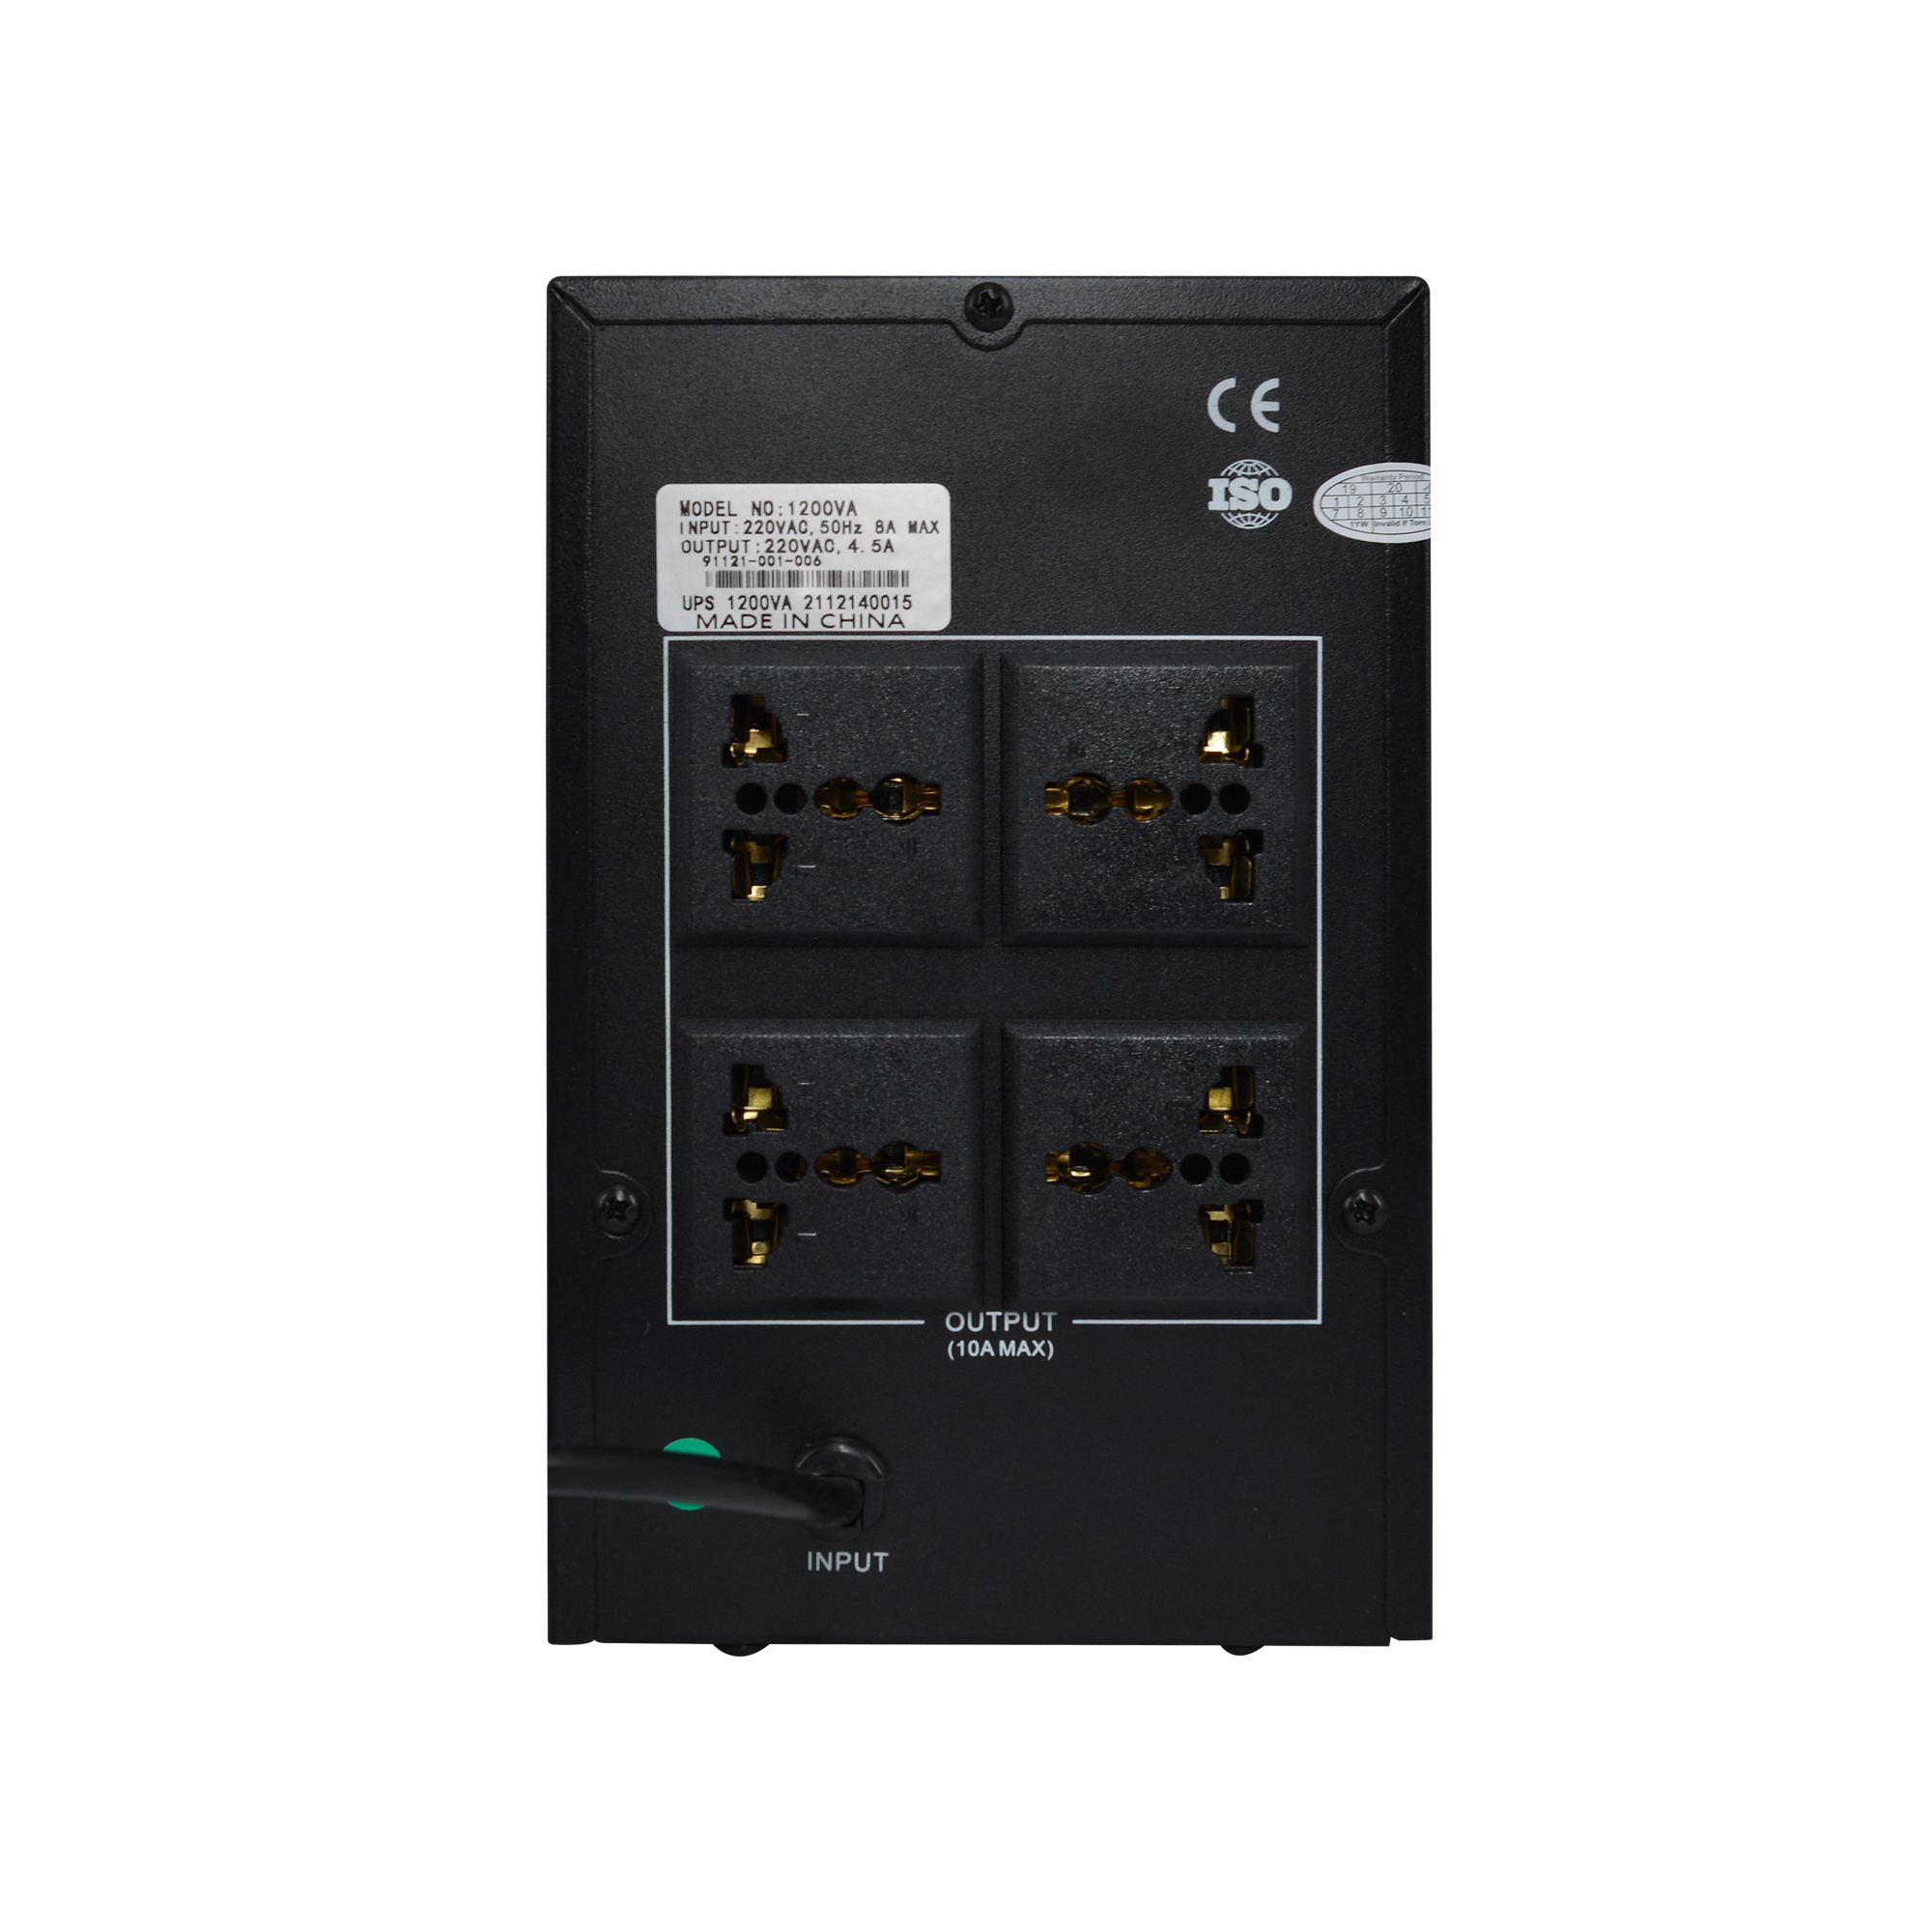 Techfine Uninterrupted Power Supply (UPS) 220V 1000VA 50Hz/60HZ 1200VA 720W Offline UPS for PC